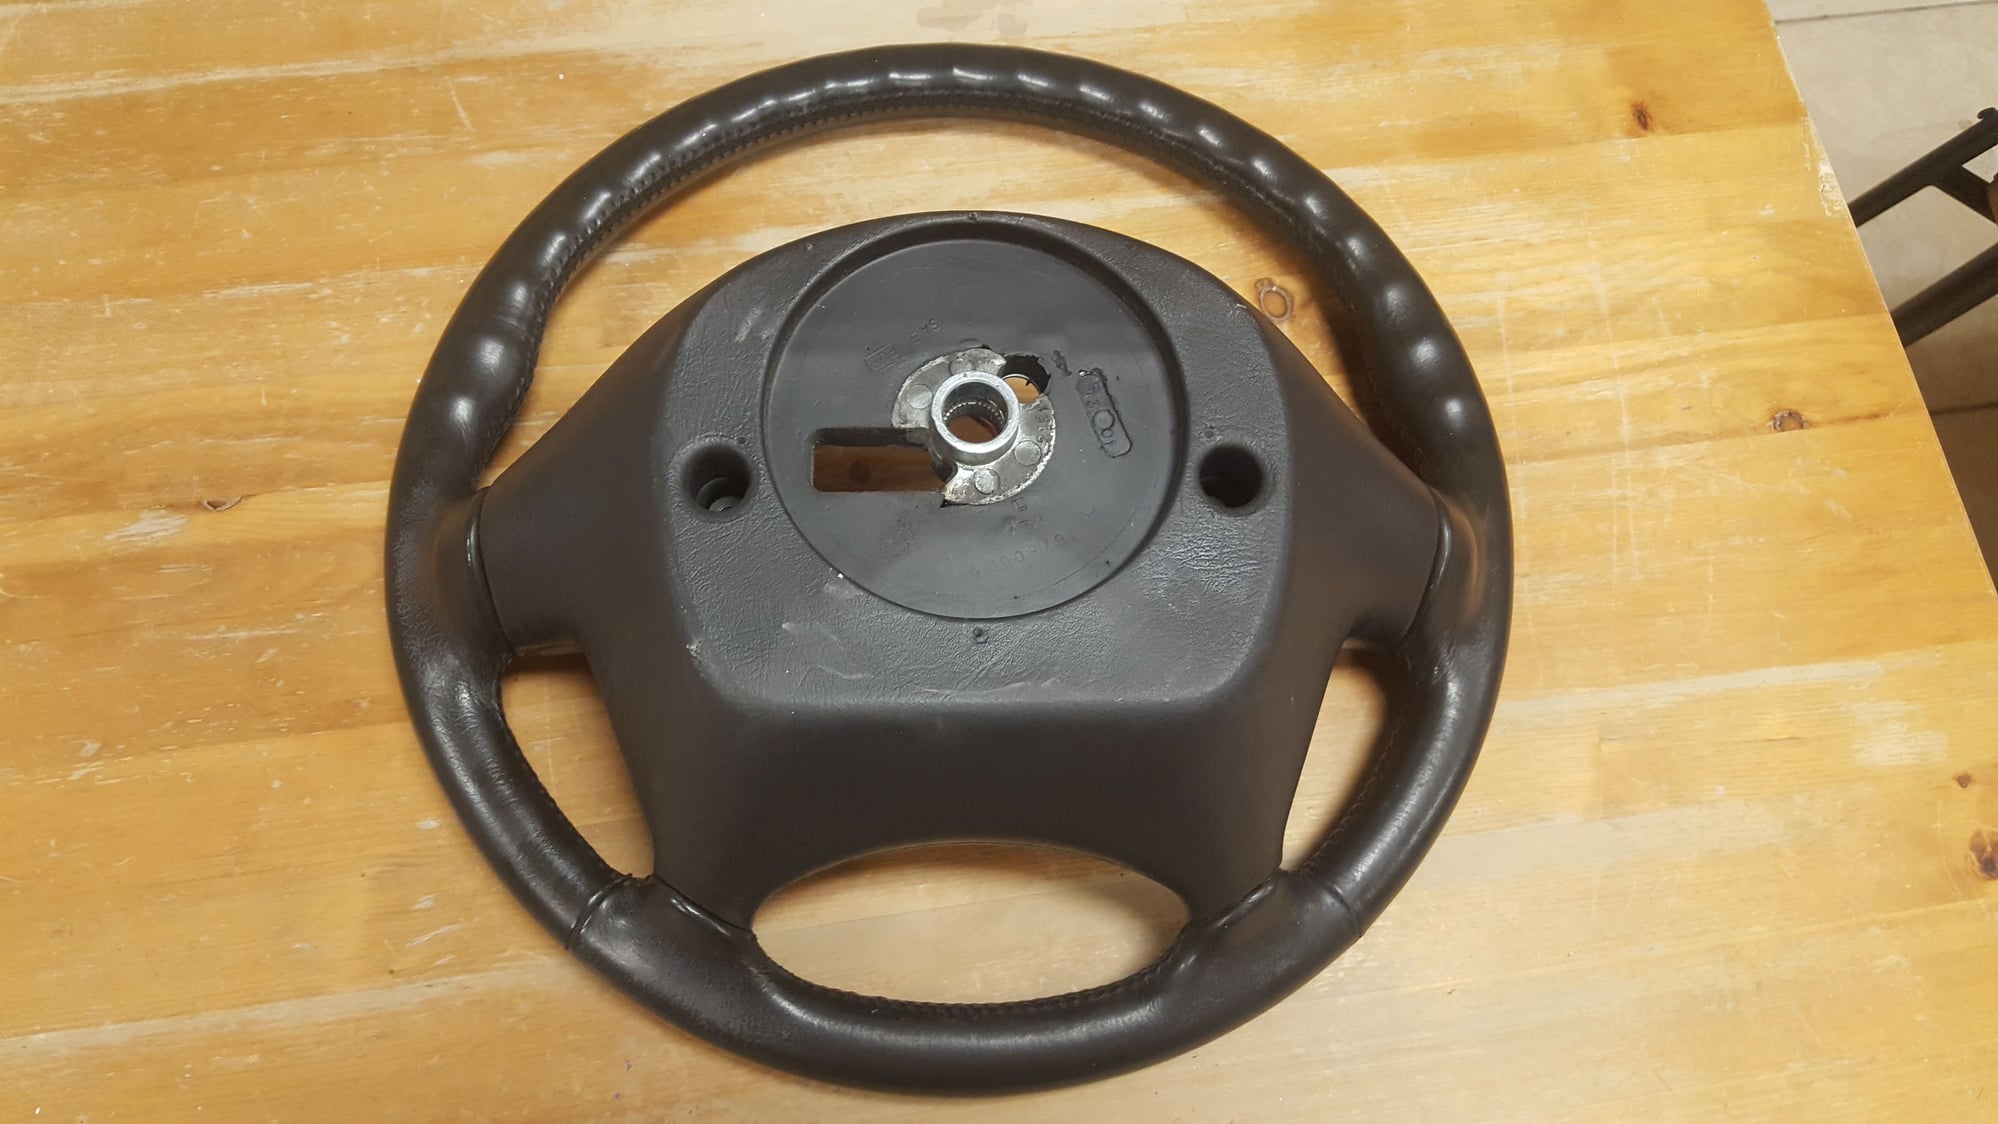  - 2000-02 Camaro Leather steering wheel w radio controls - Merritt Island, FL 32952, United States